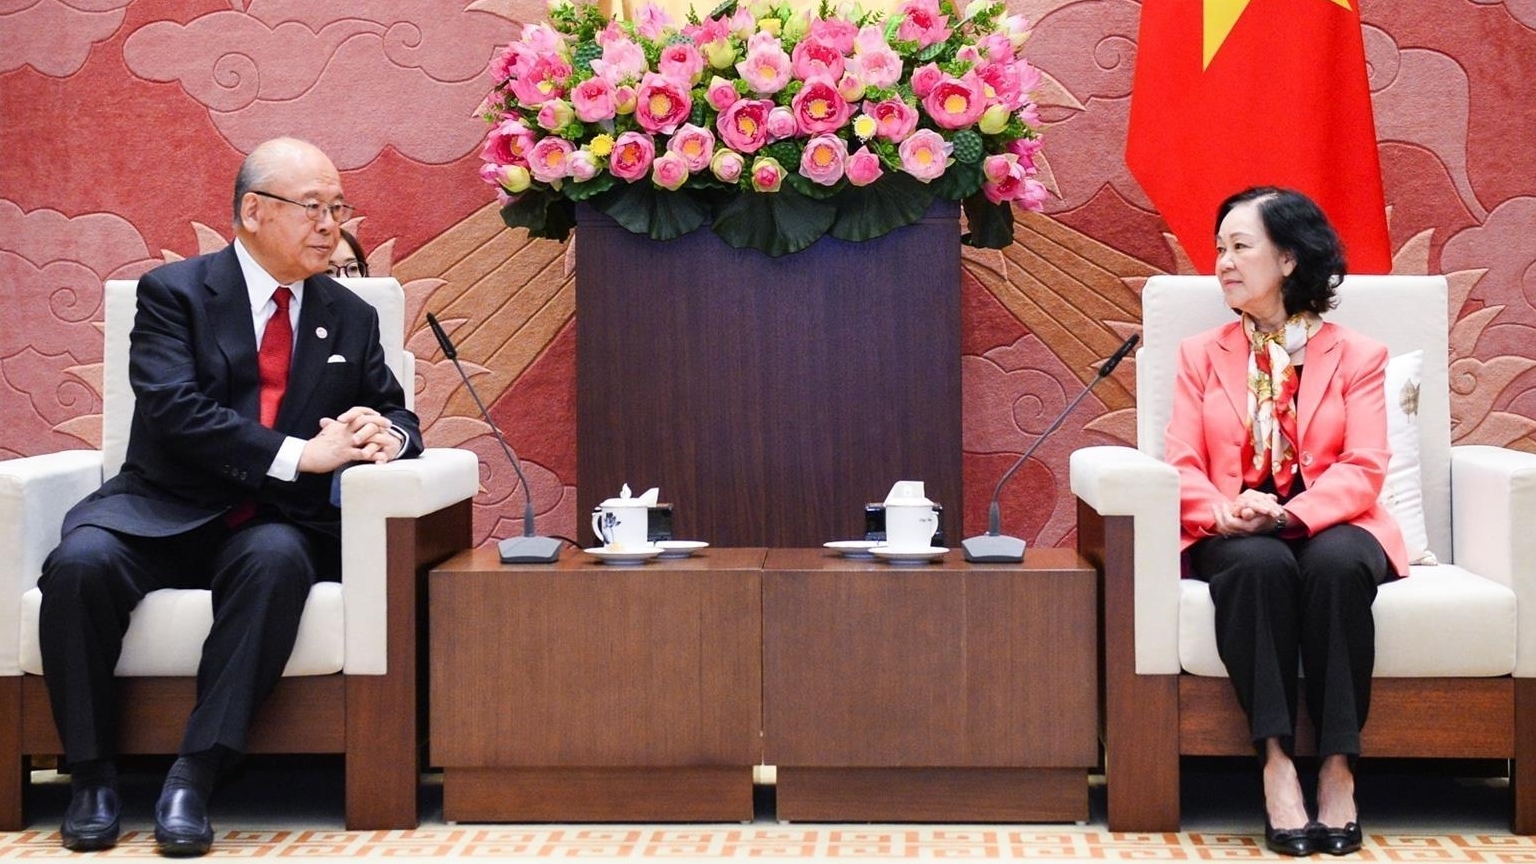 Продвижение сотрудничества между парламентариями Вьетнама и Японии